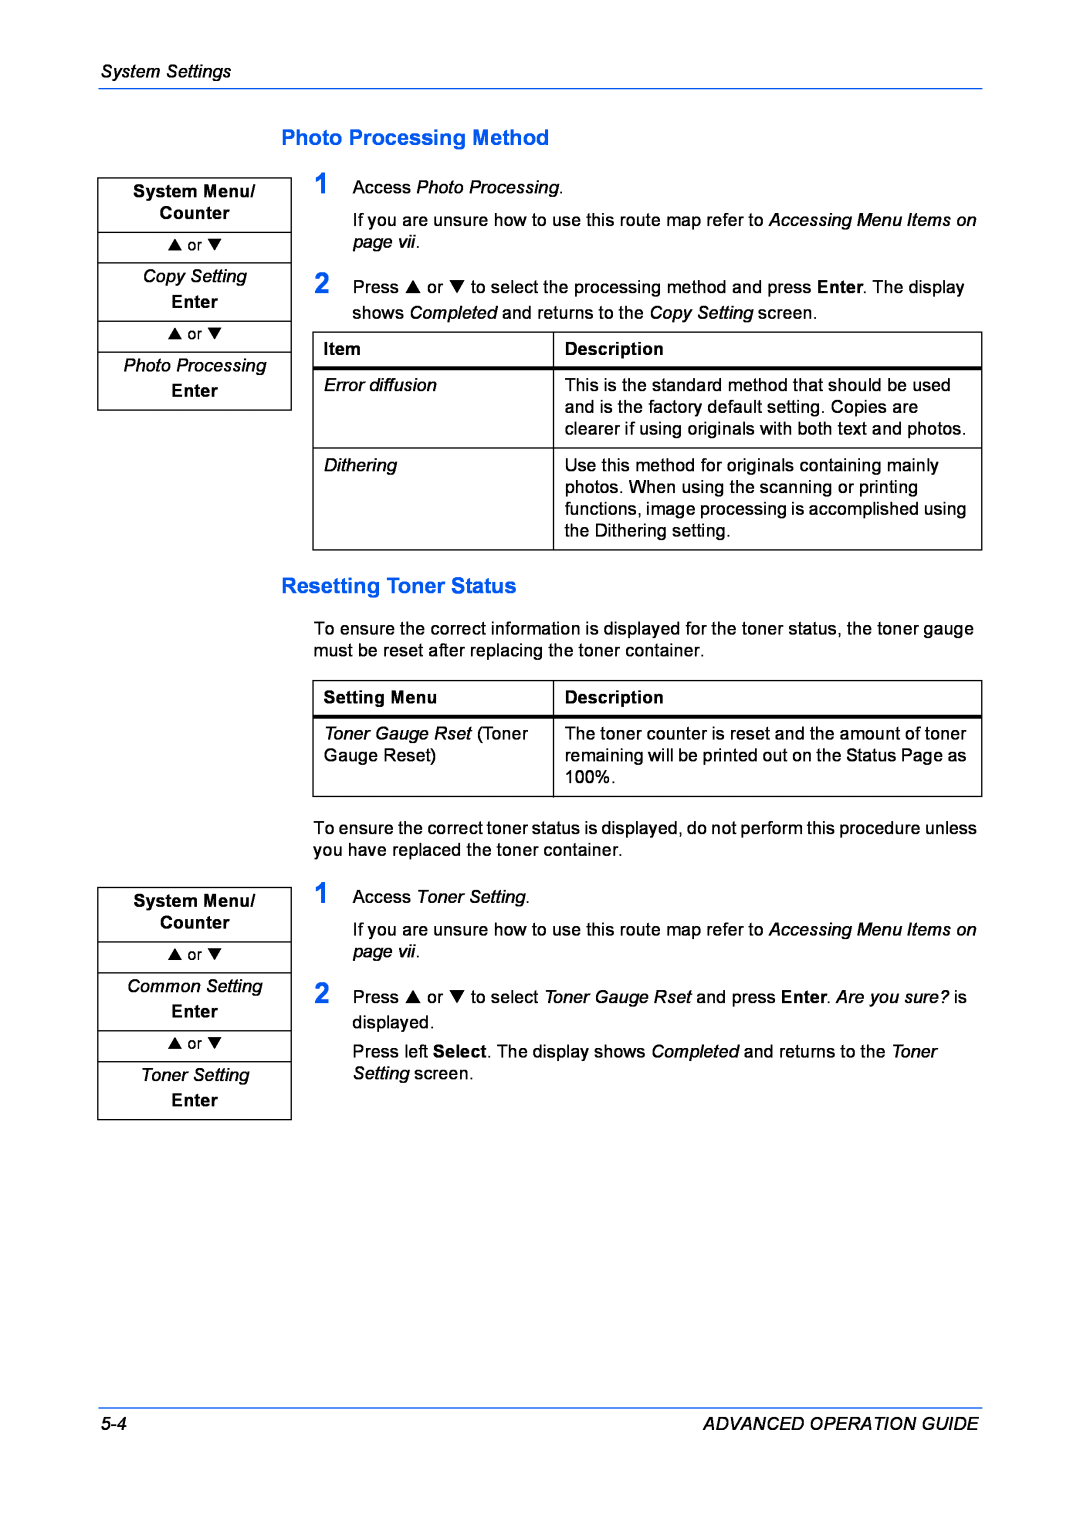 Kyocera KM-1820 manual Photo Processing Method, Resetting Toner Status, Setting Menu, Description 